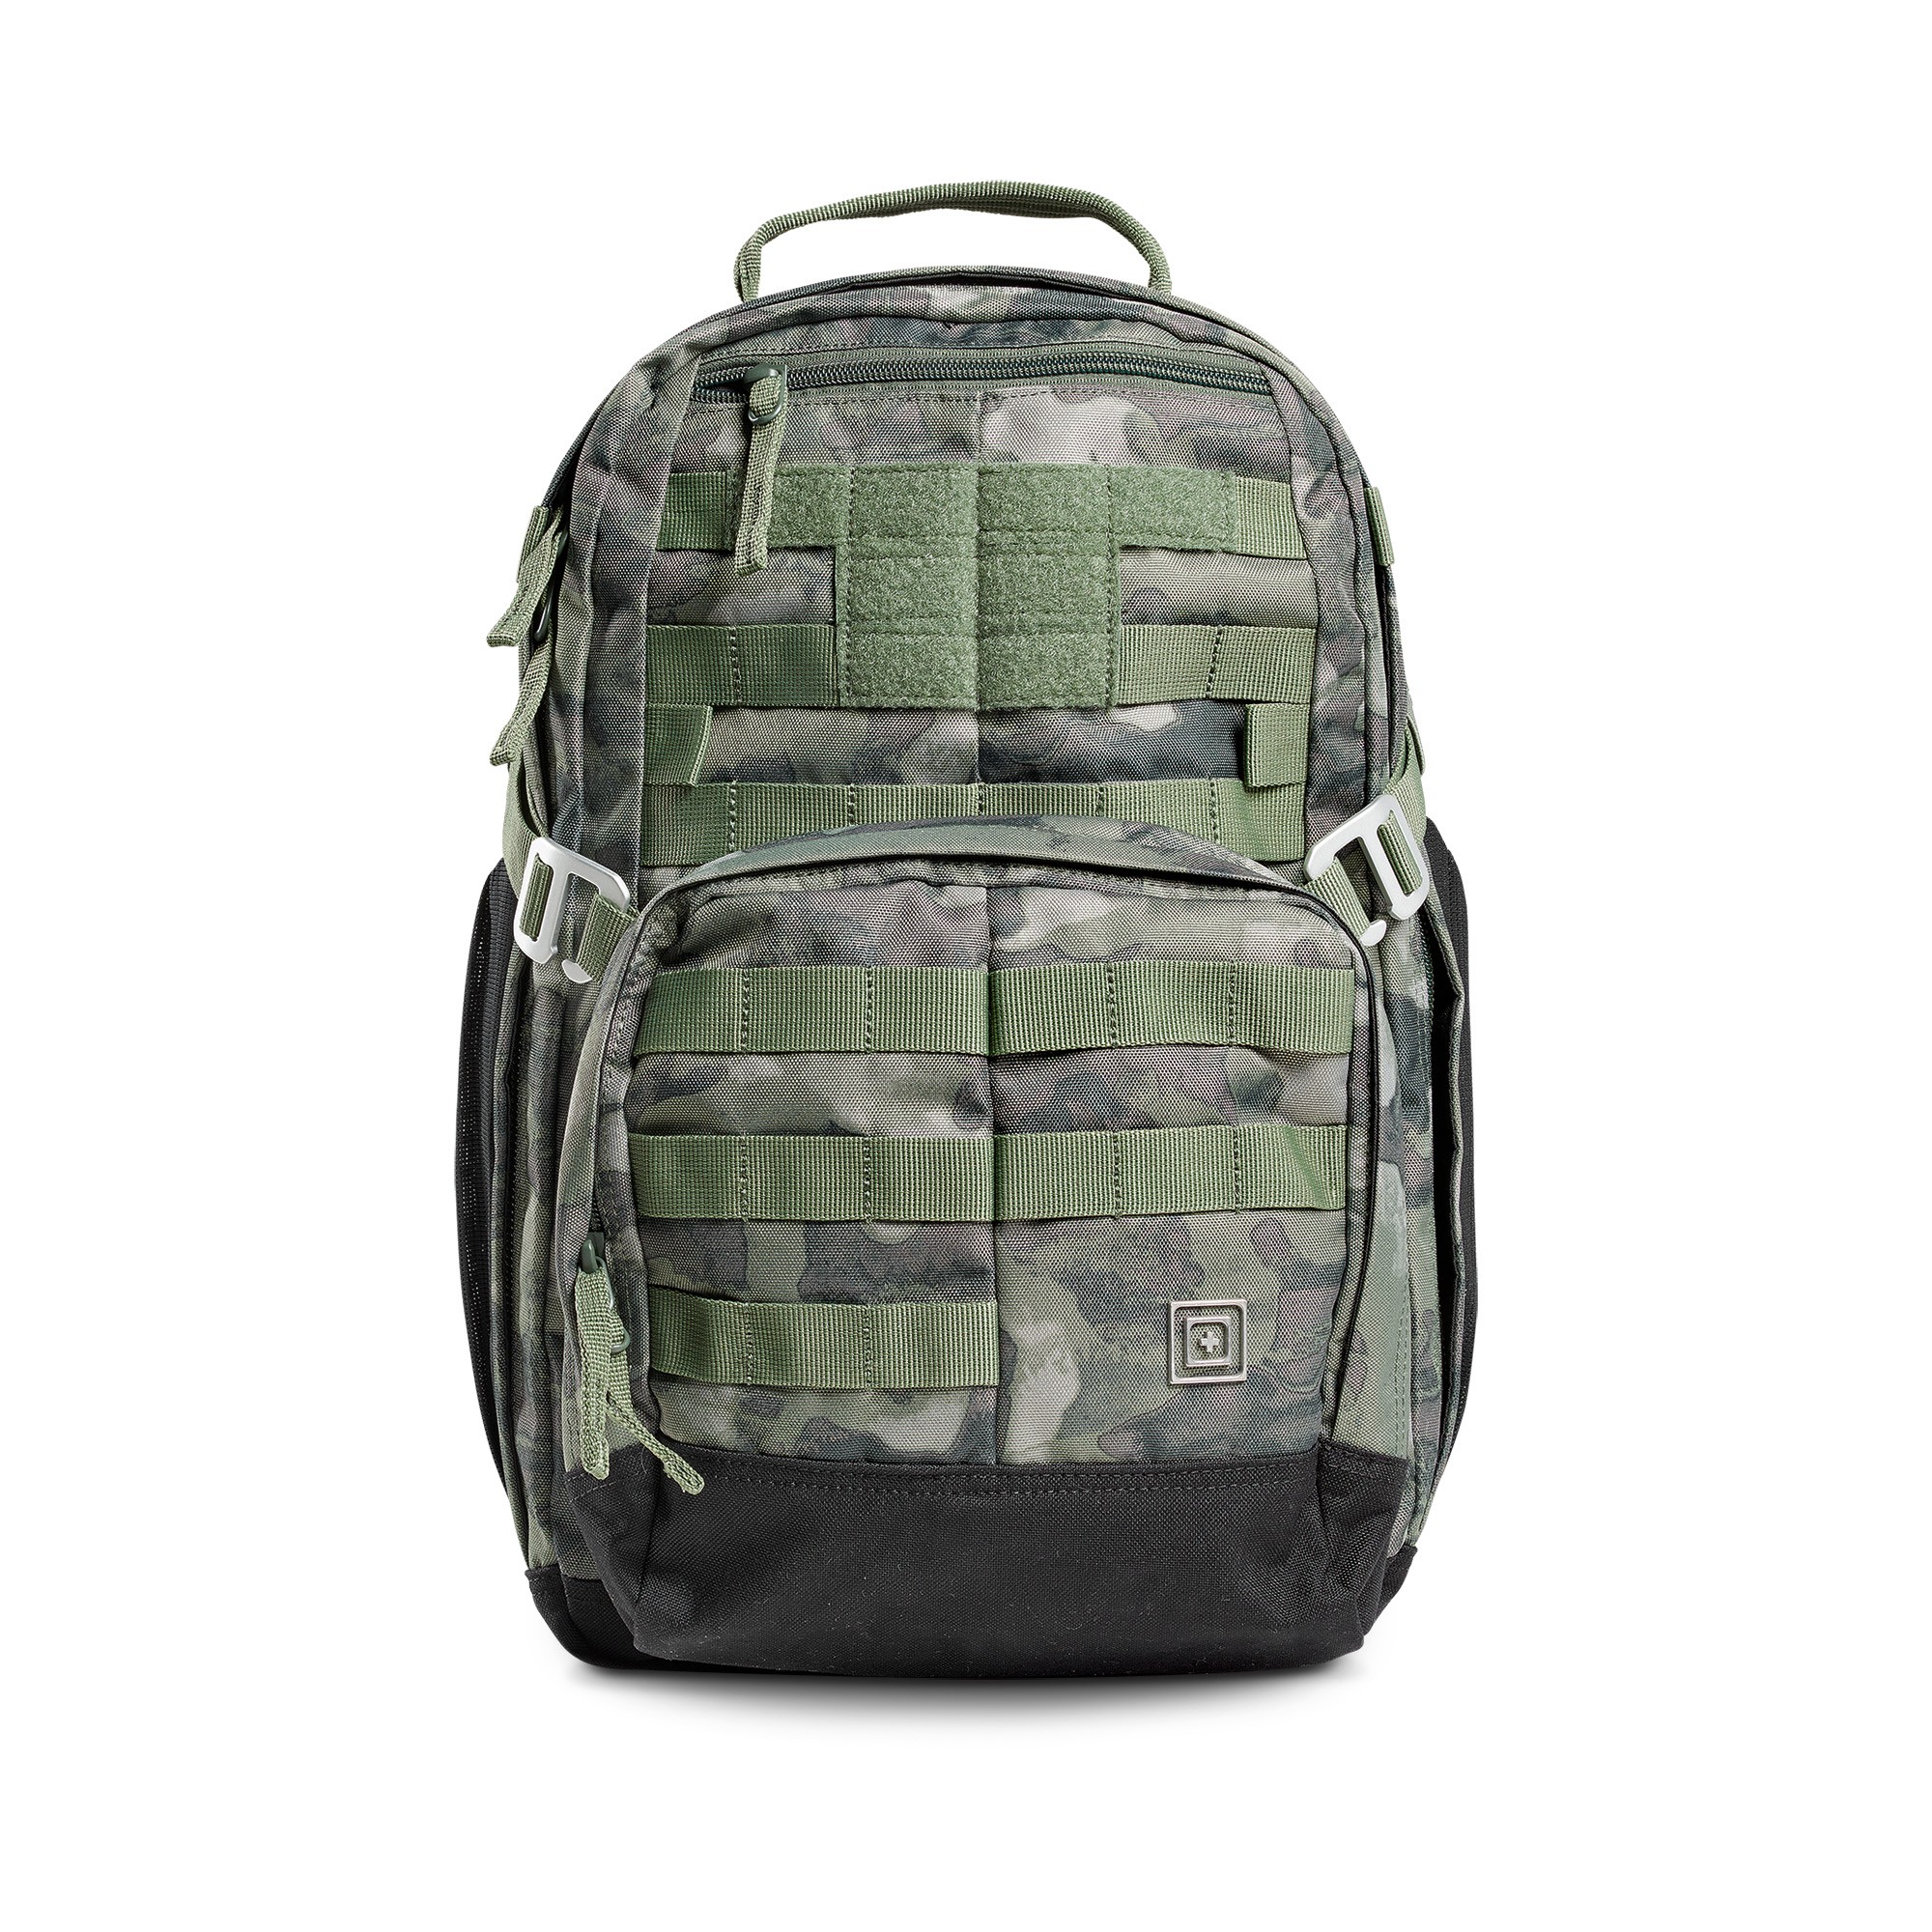 G.P.S.Tactical Range Bag, Einsatztaschen Range Bags, Rucksäcke Taschen